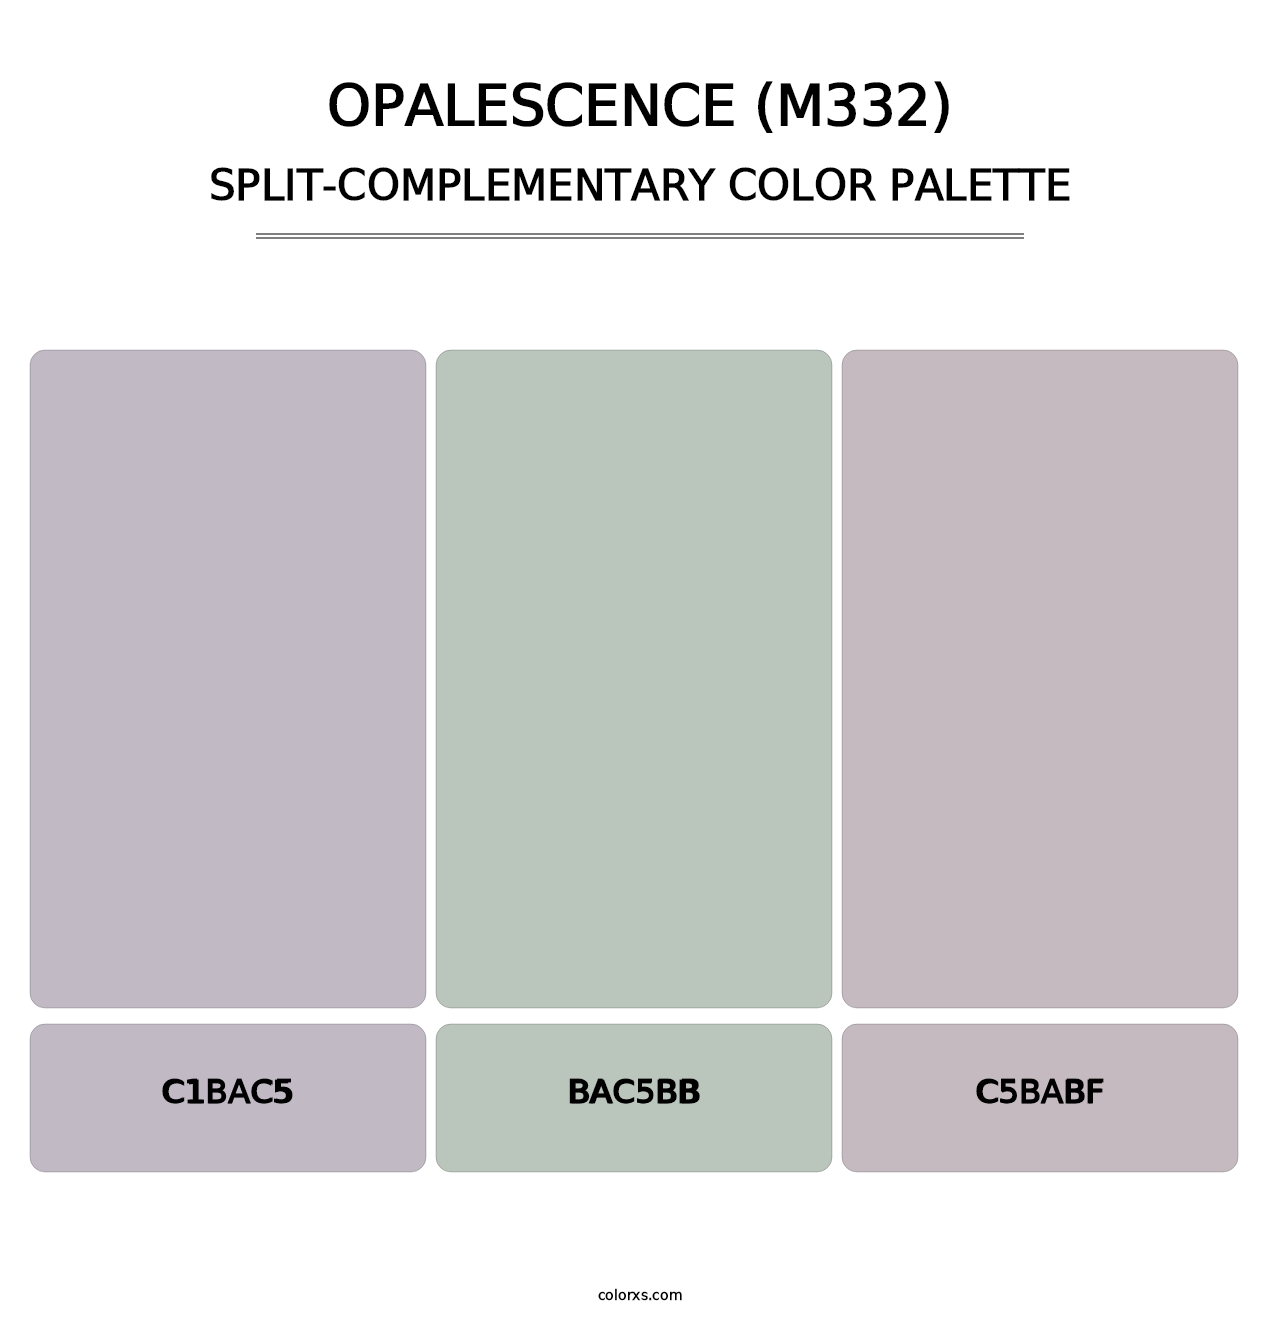 Opalescence (M332) - Split-Complementary Color Palette